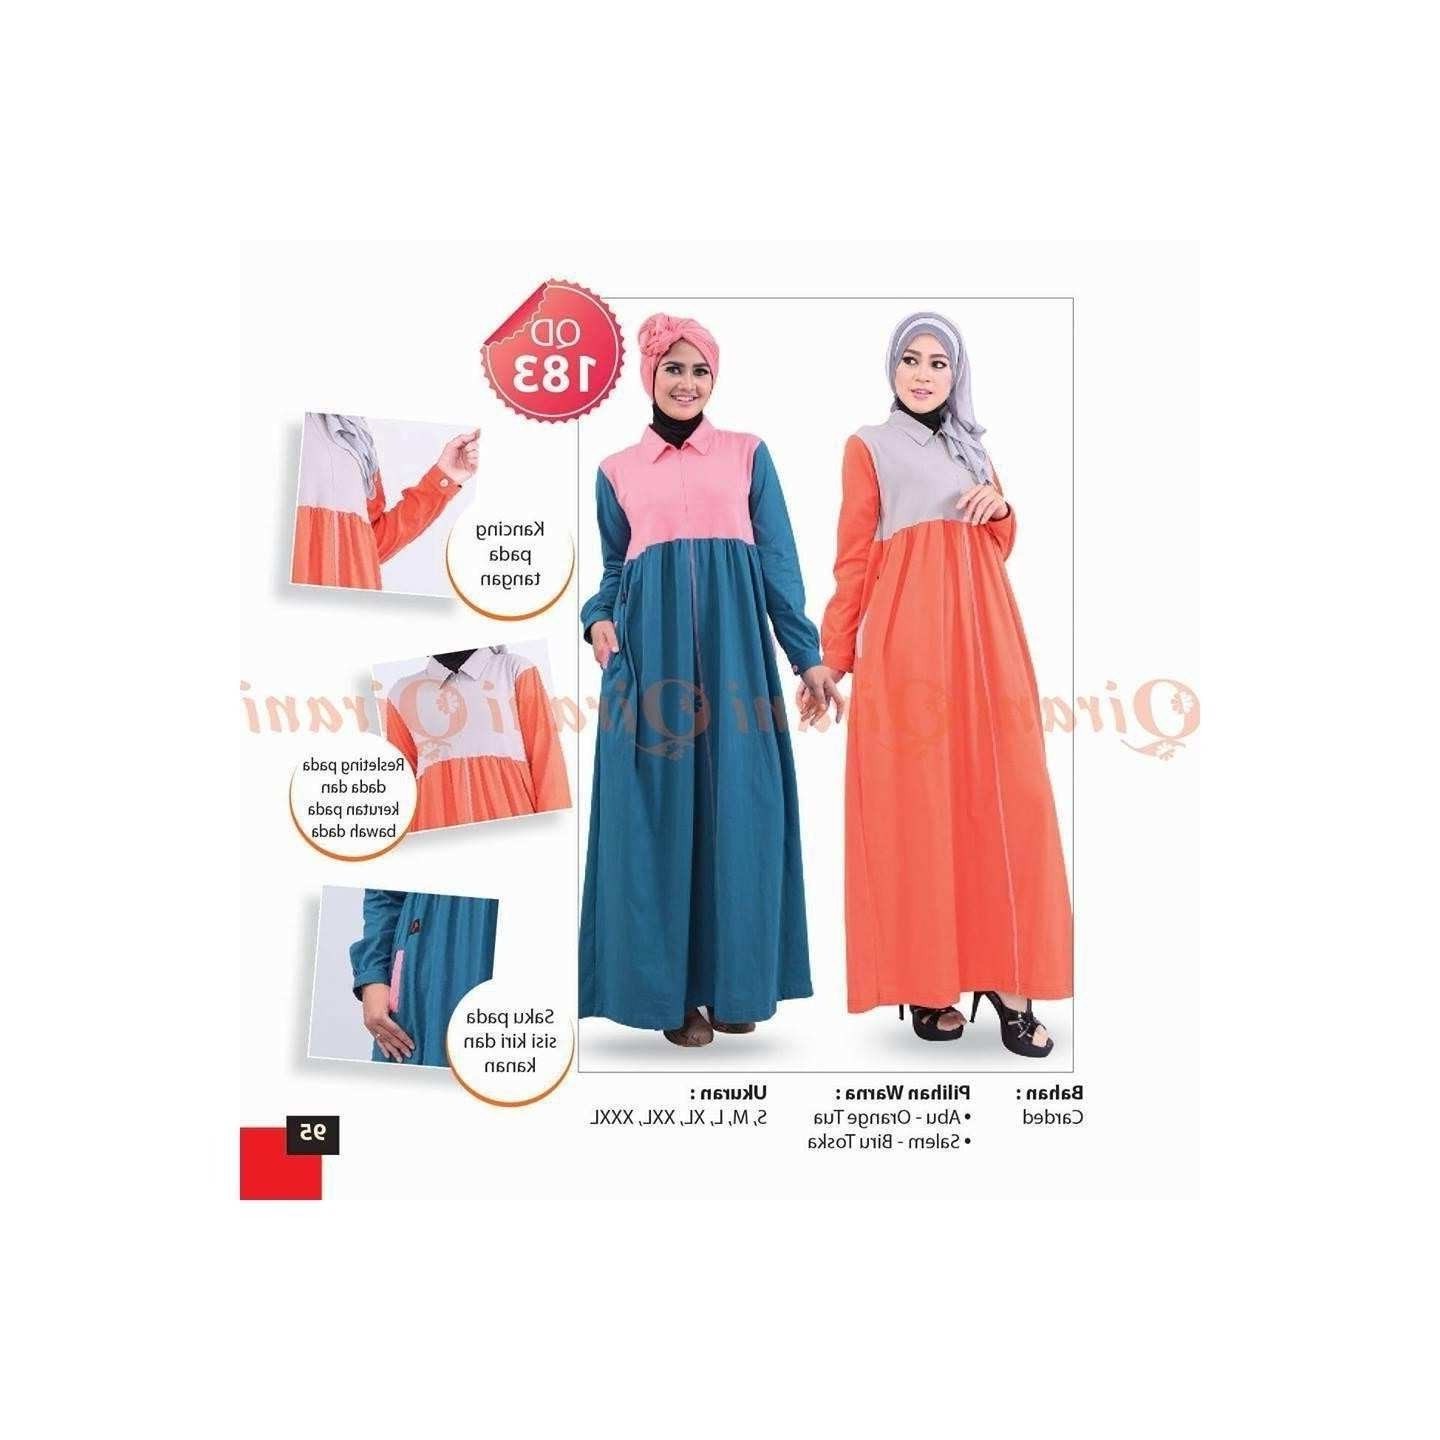 Design Contoh Gaun Pengantin Muslim Budm Foto Wanita Bercadar Modern Cantik Gaun Pengantin Muslimah